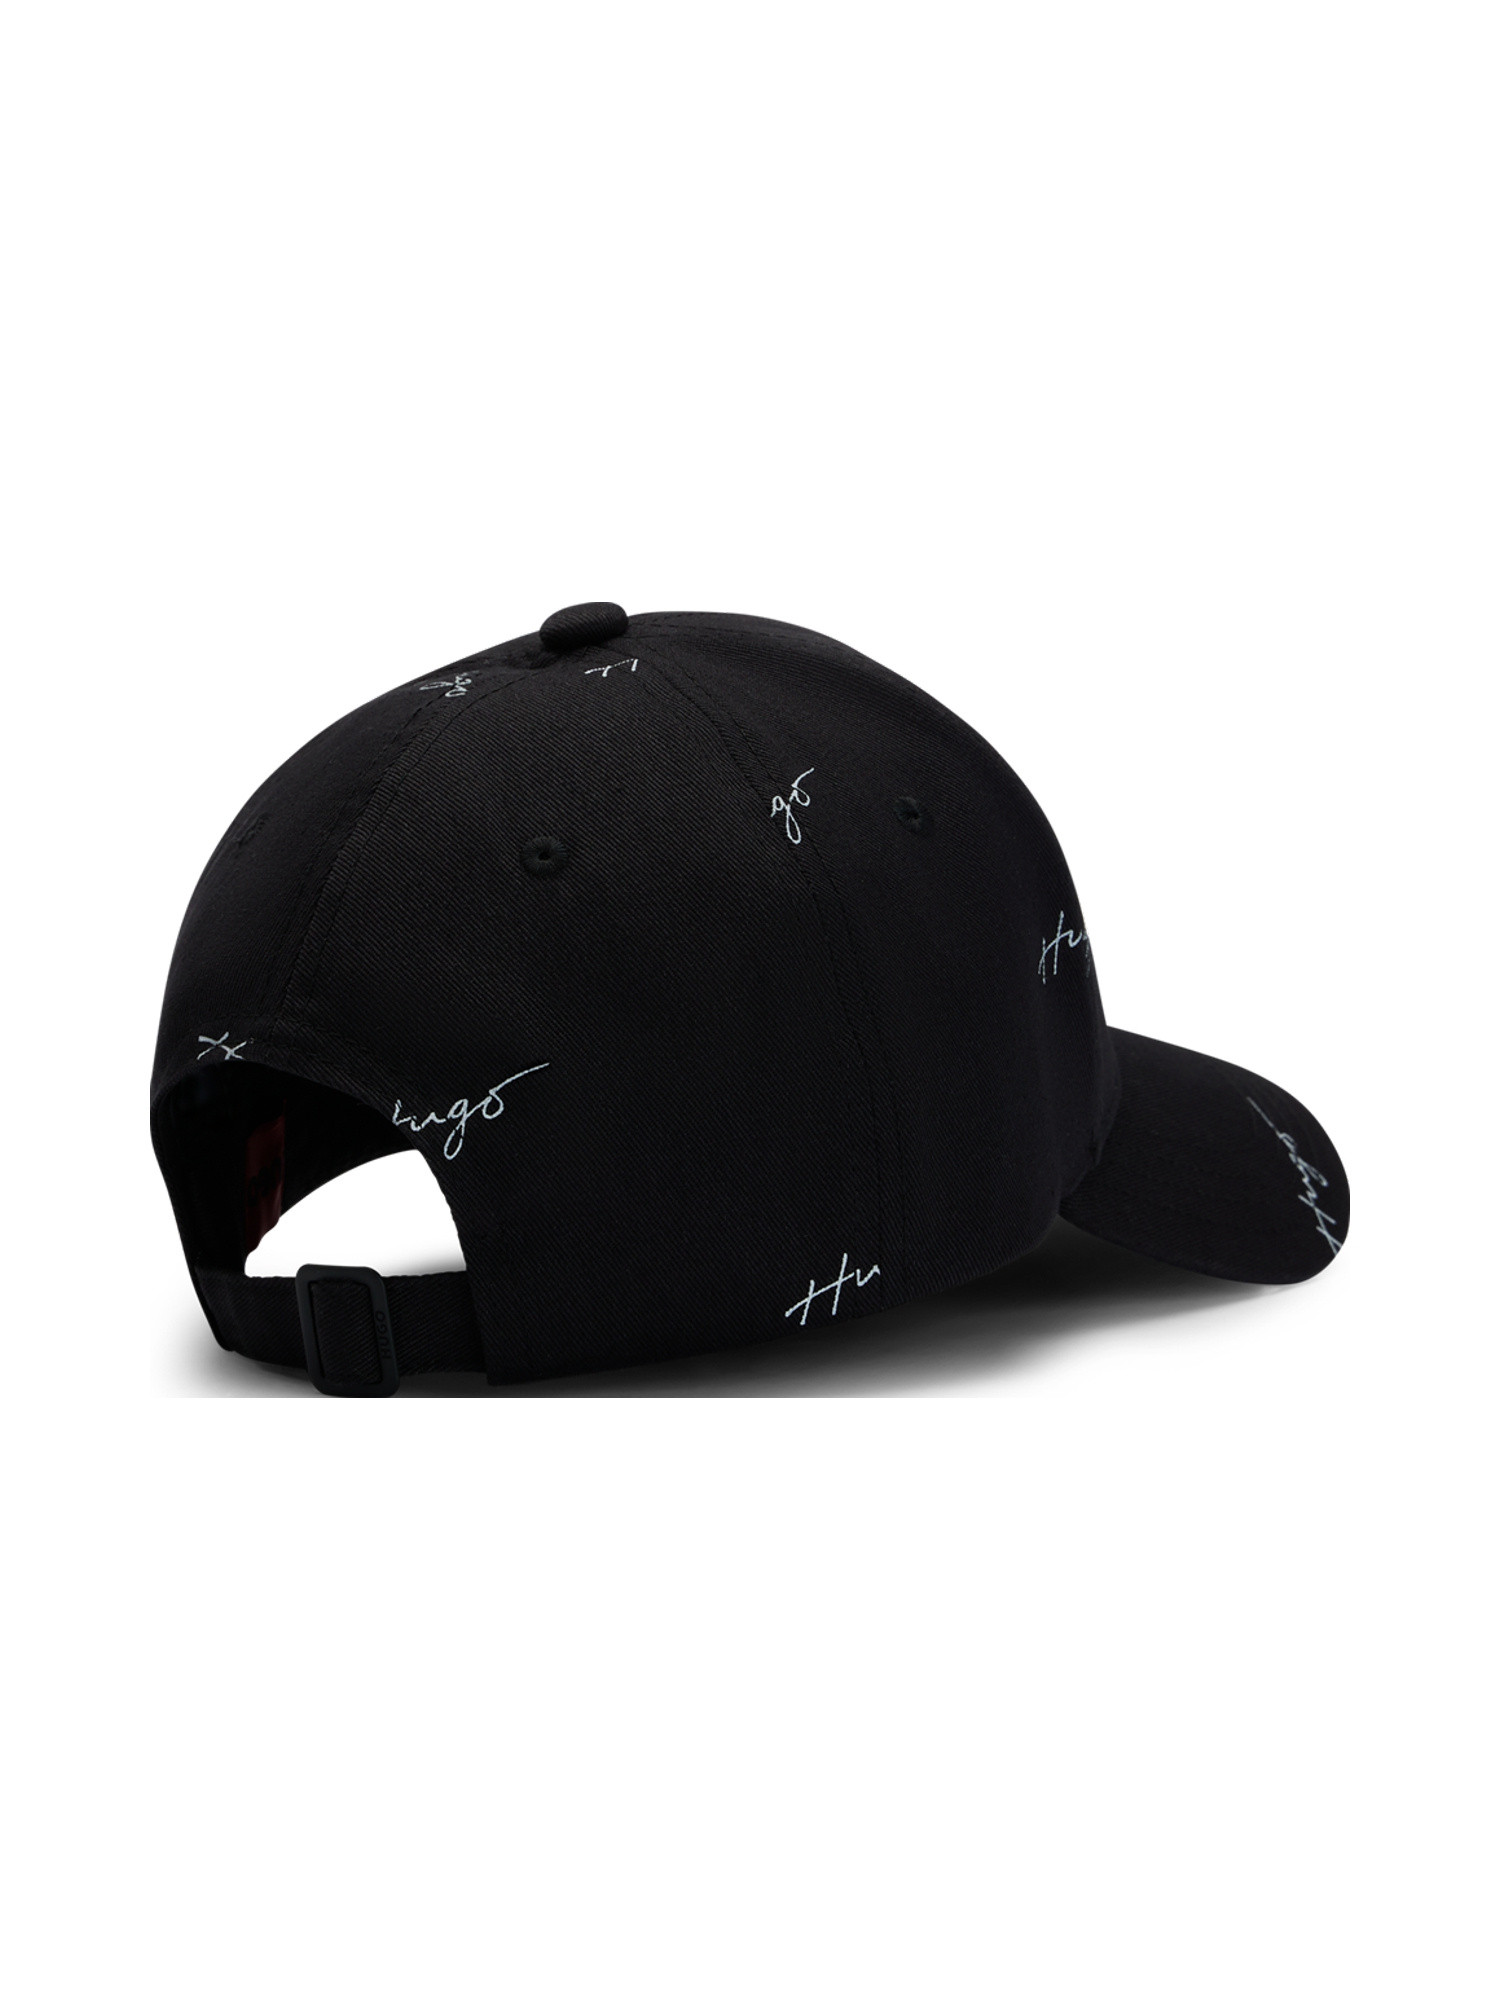 Hugo - Baseball cap with all over logo, Black, large image number 1